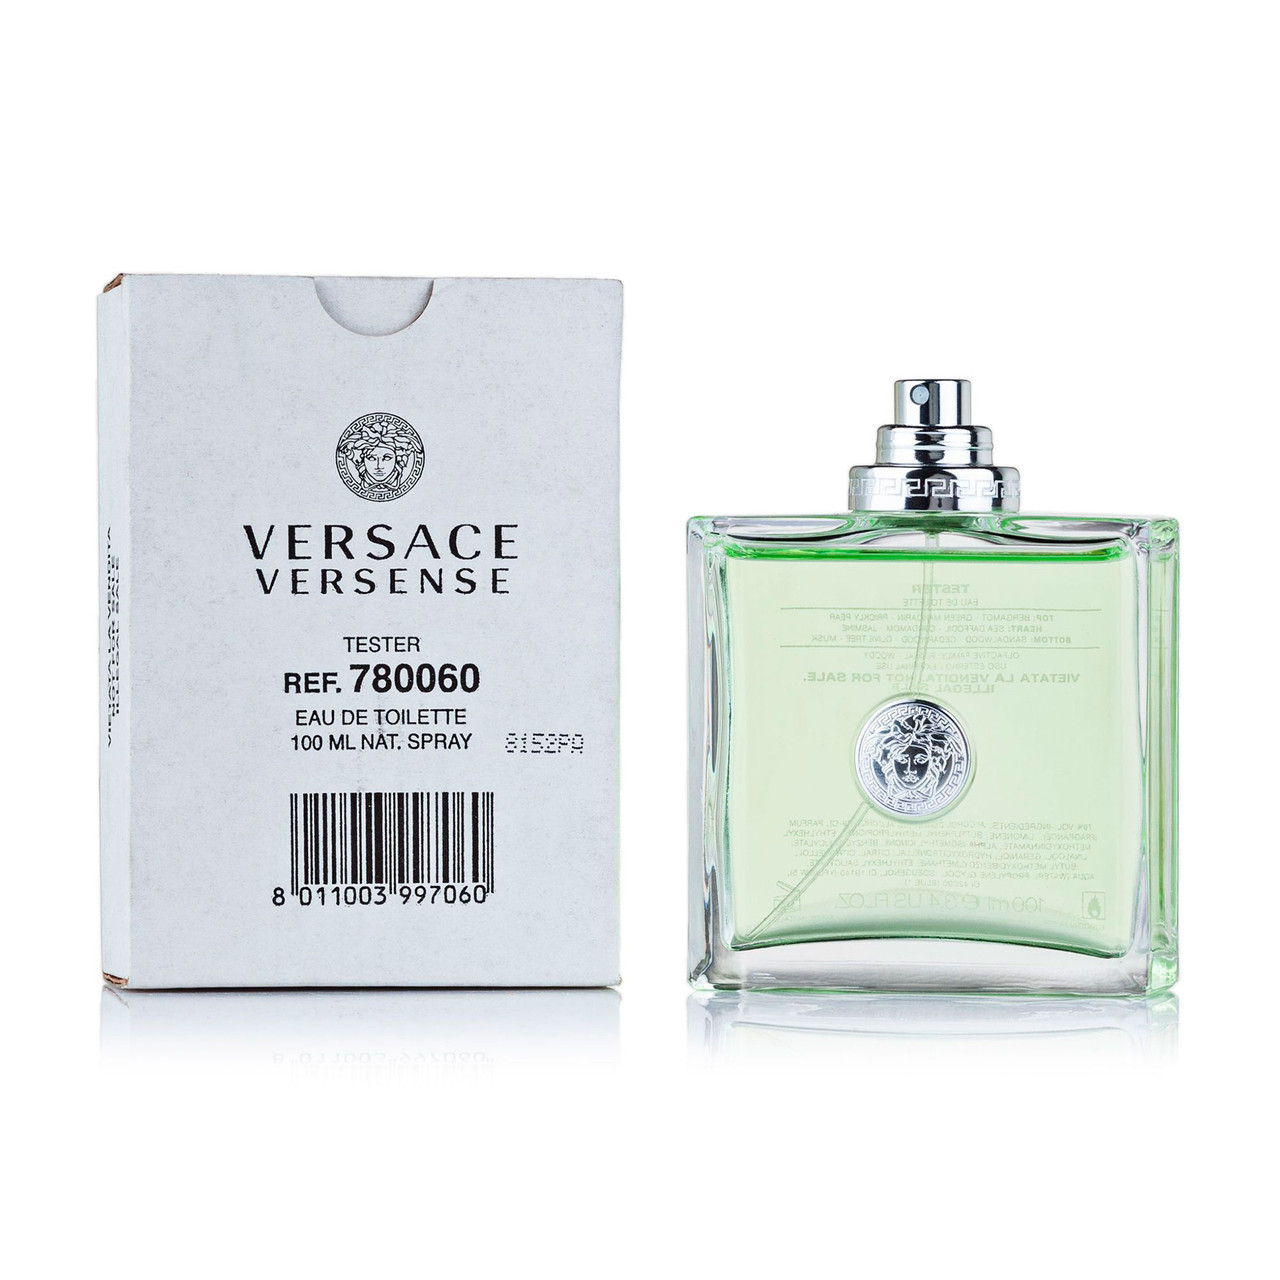 Versace Versense 100 Ml Tester | Store www.mariamontes.net